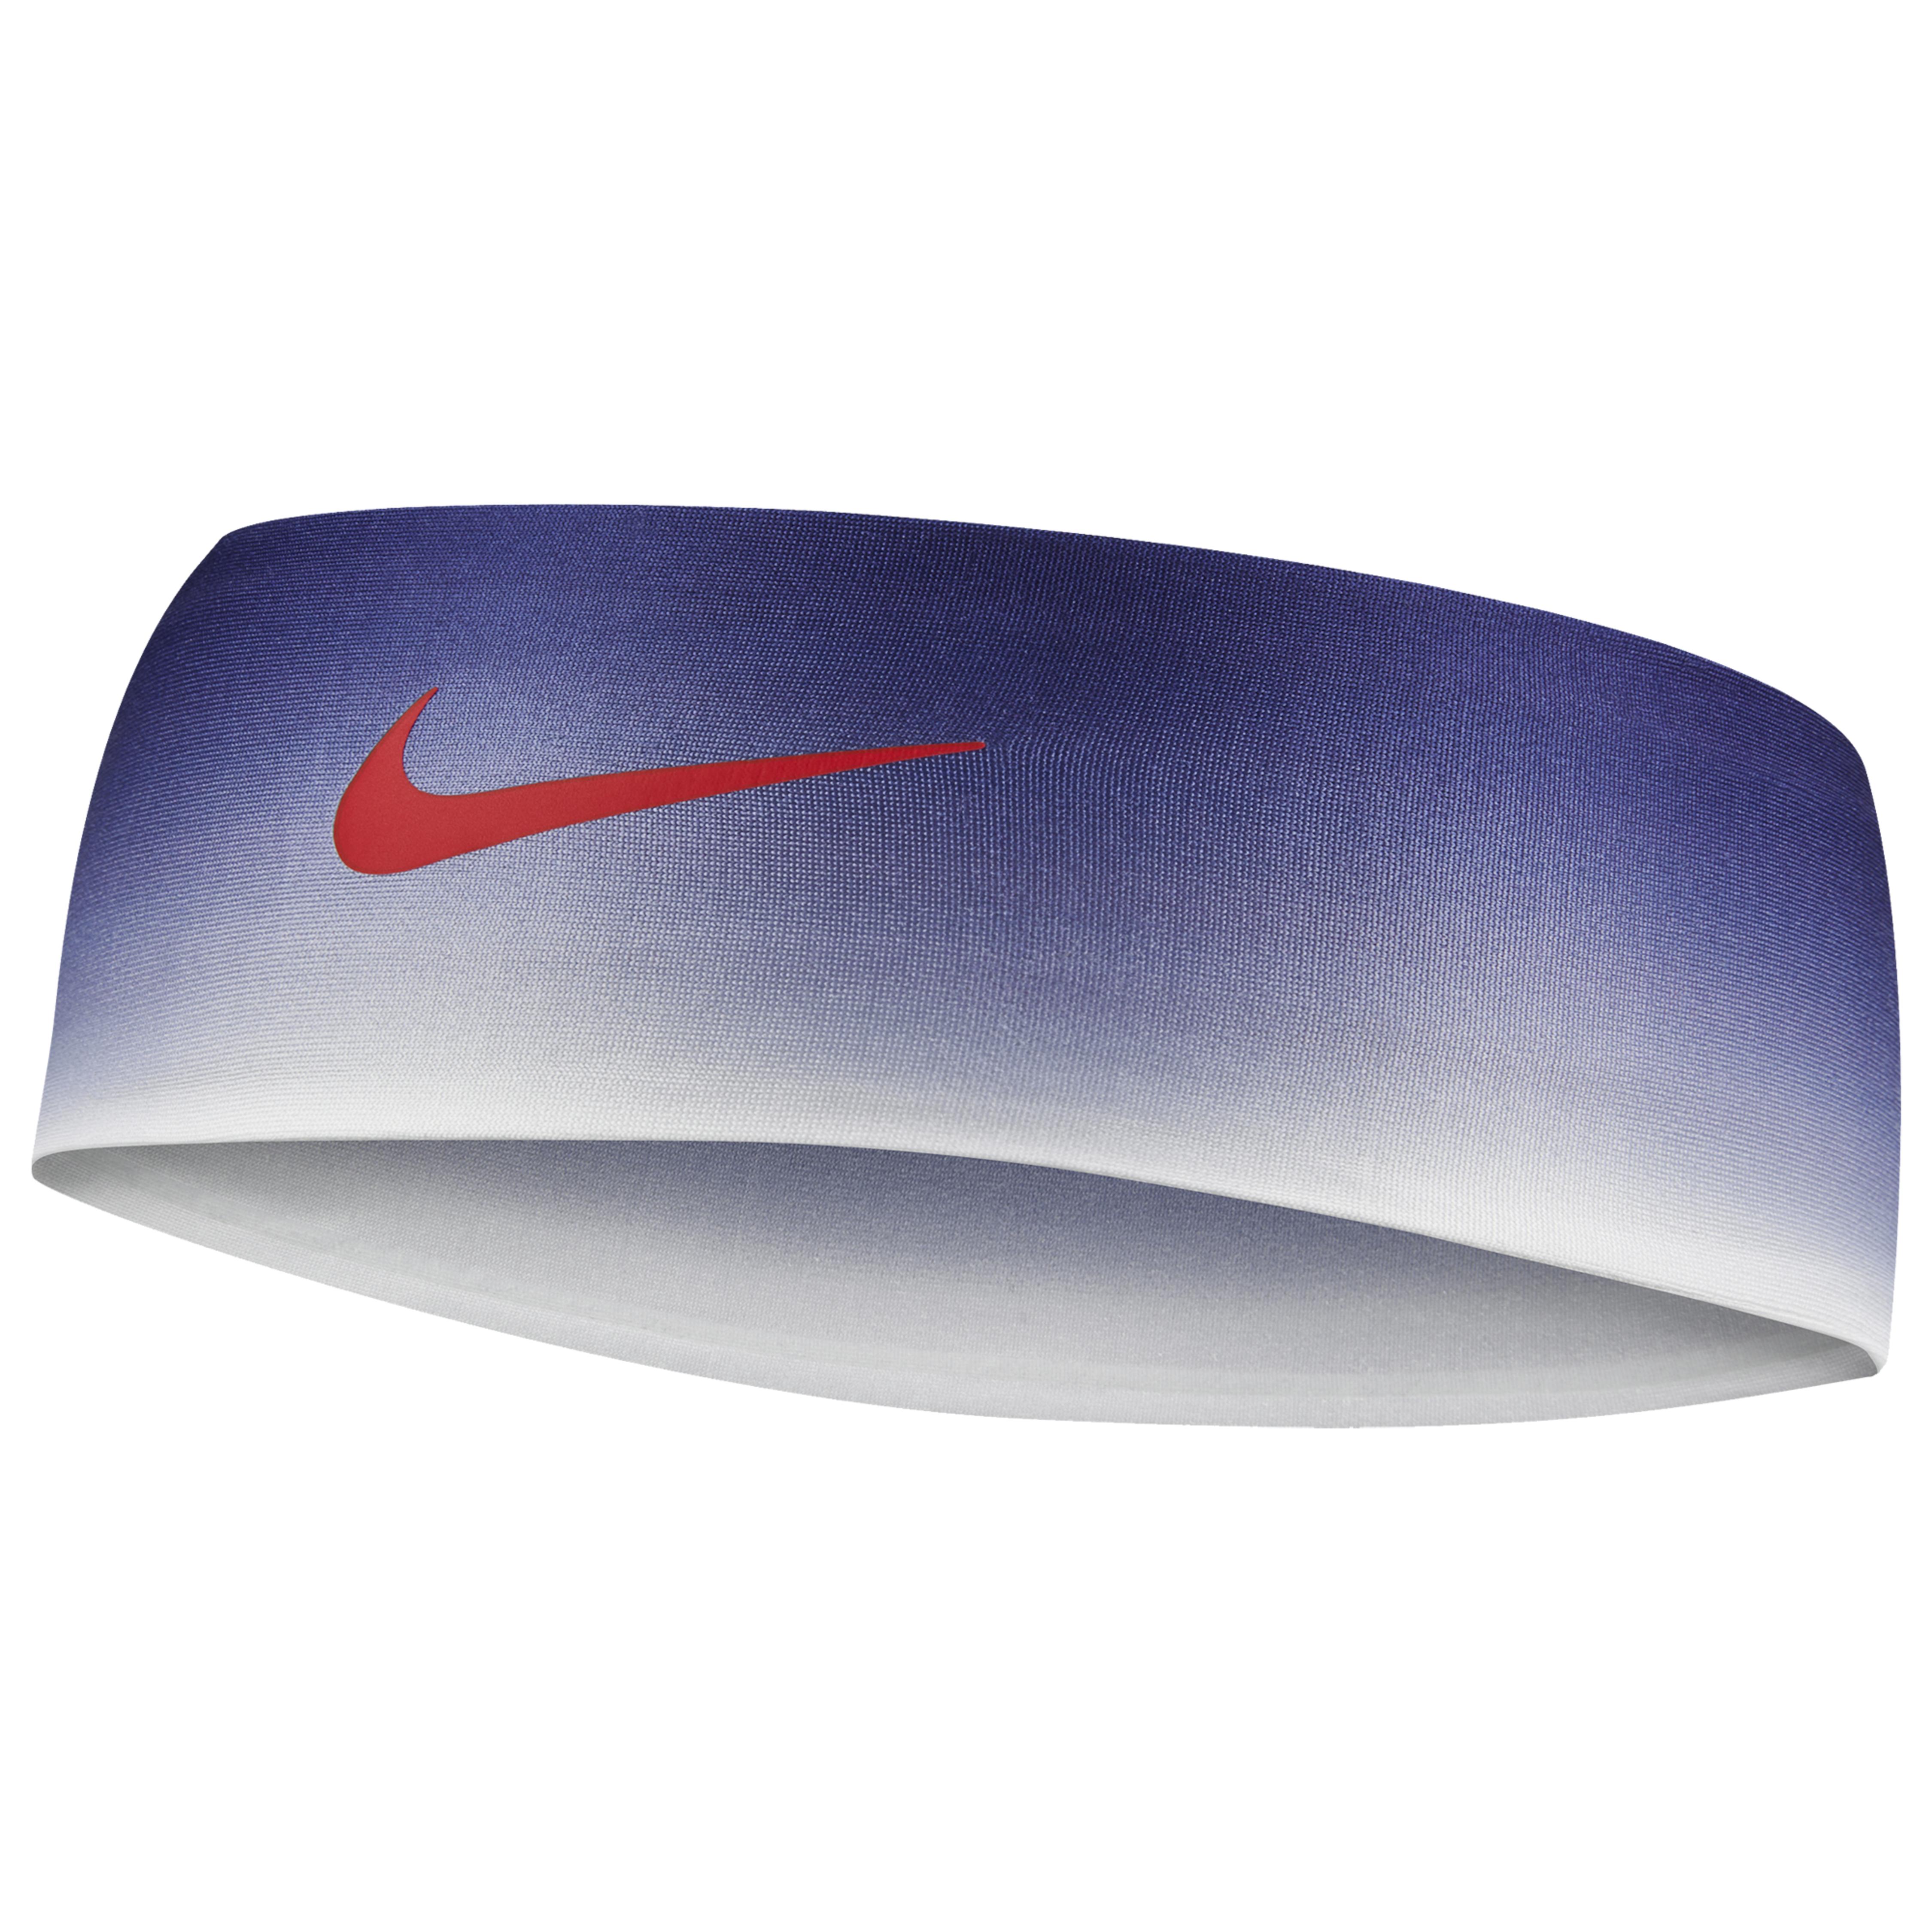 Nike Synthetic Fury Headband in Blue - Lyst